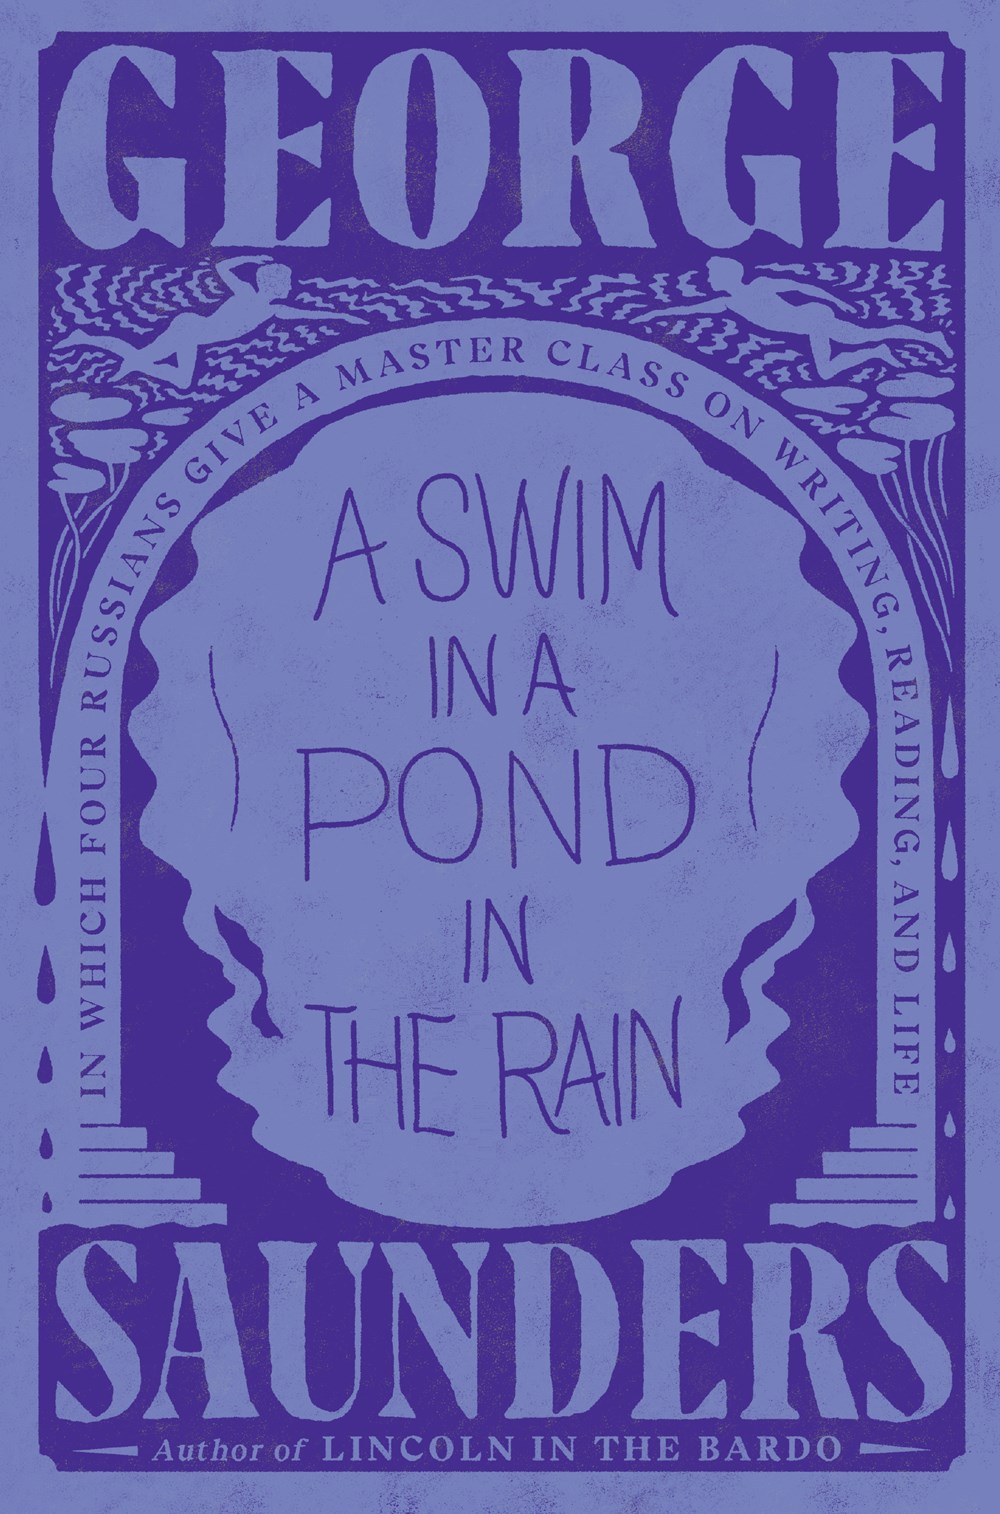 A Swim in a Pond in the Rain cover image